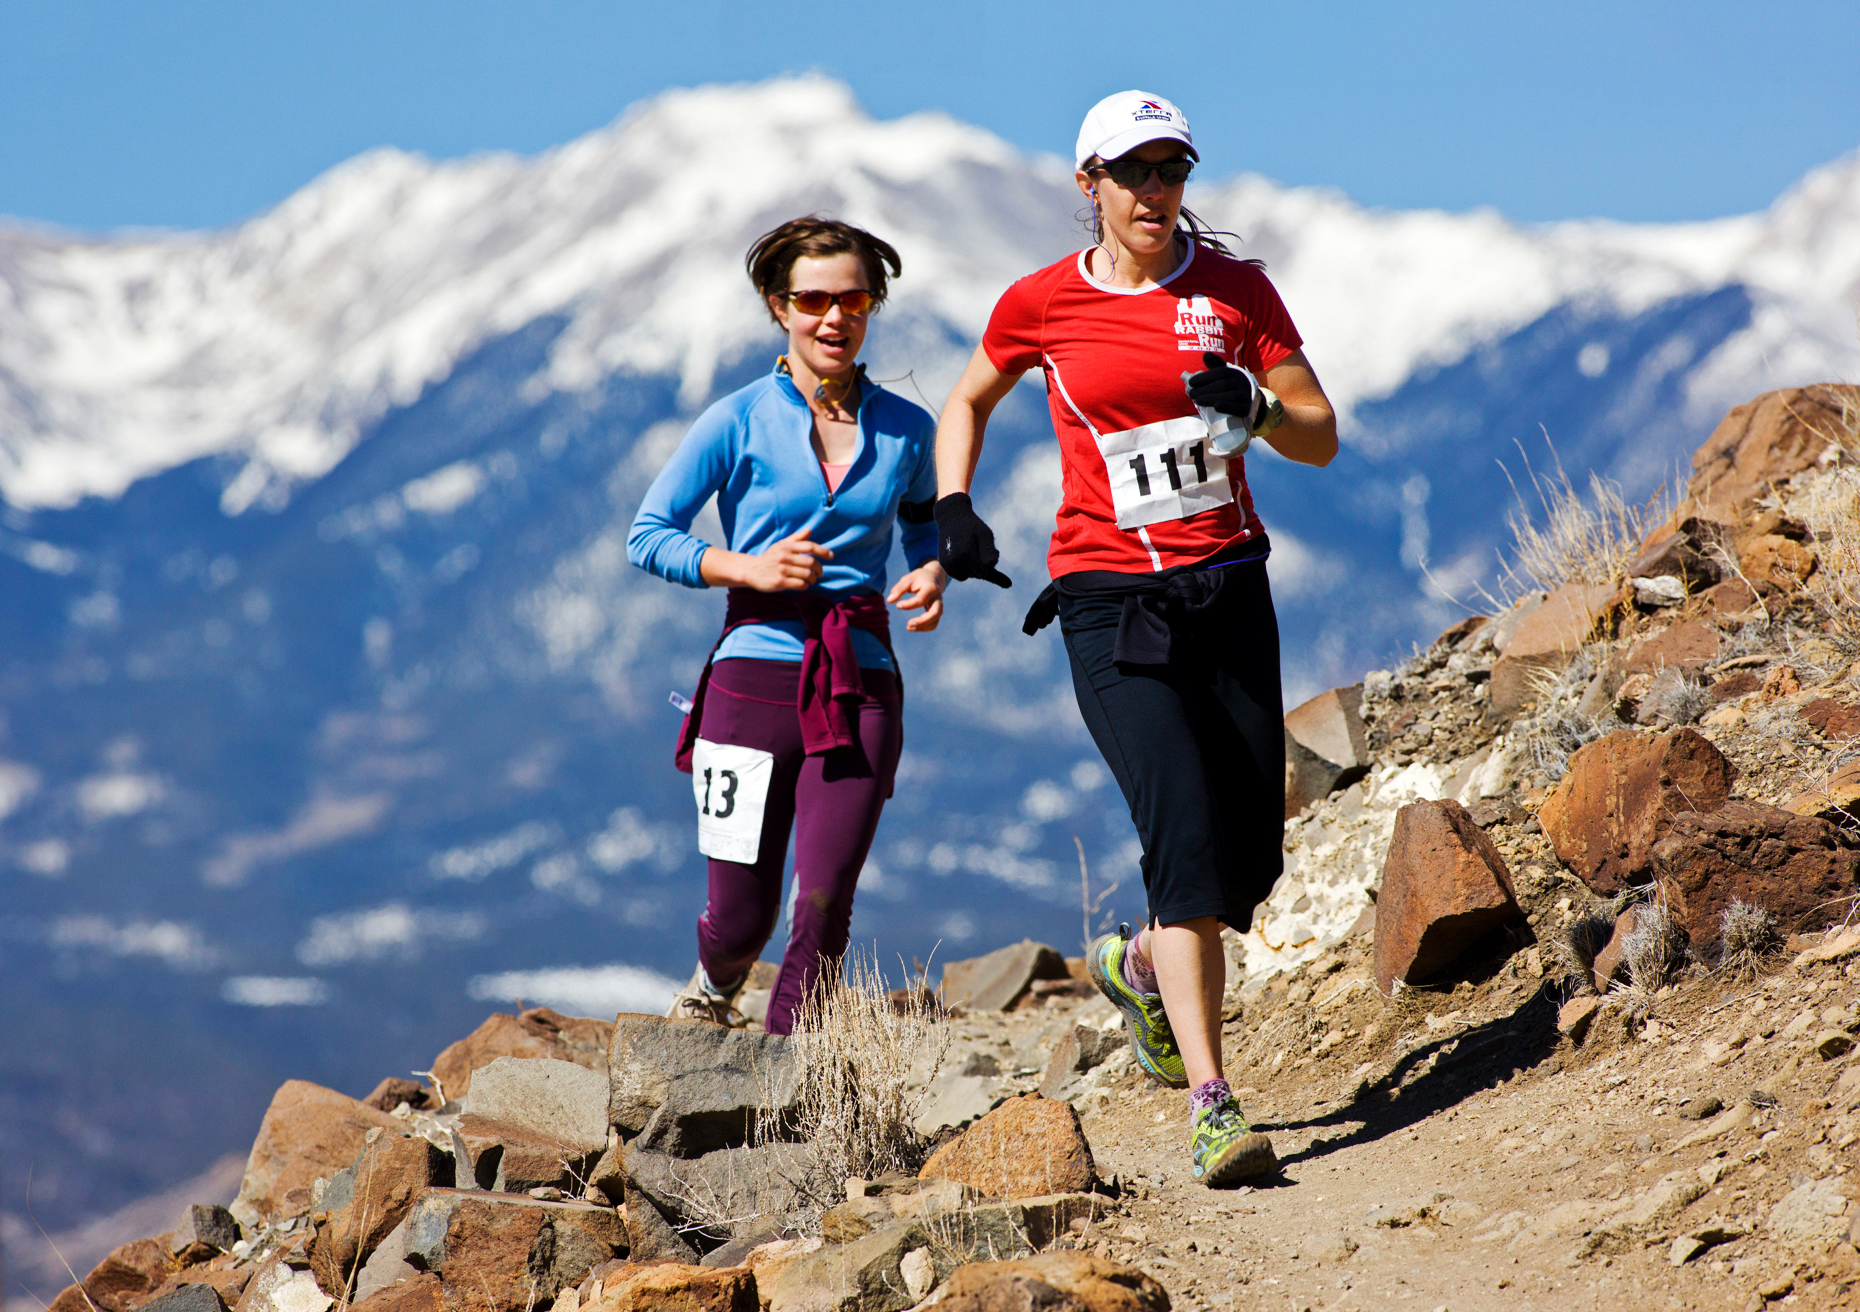 Runners compete in the Run Through Time Half Marathon, Salida, Colorado, USA